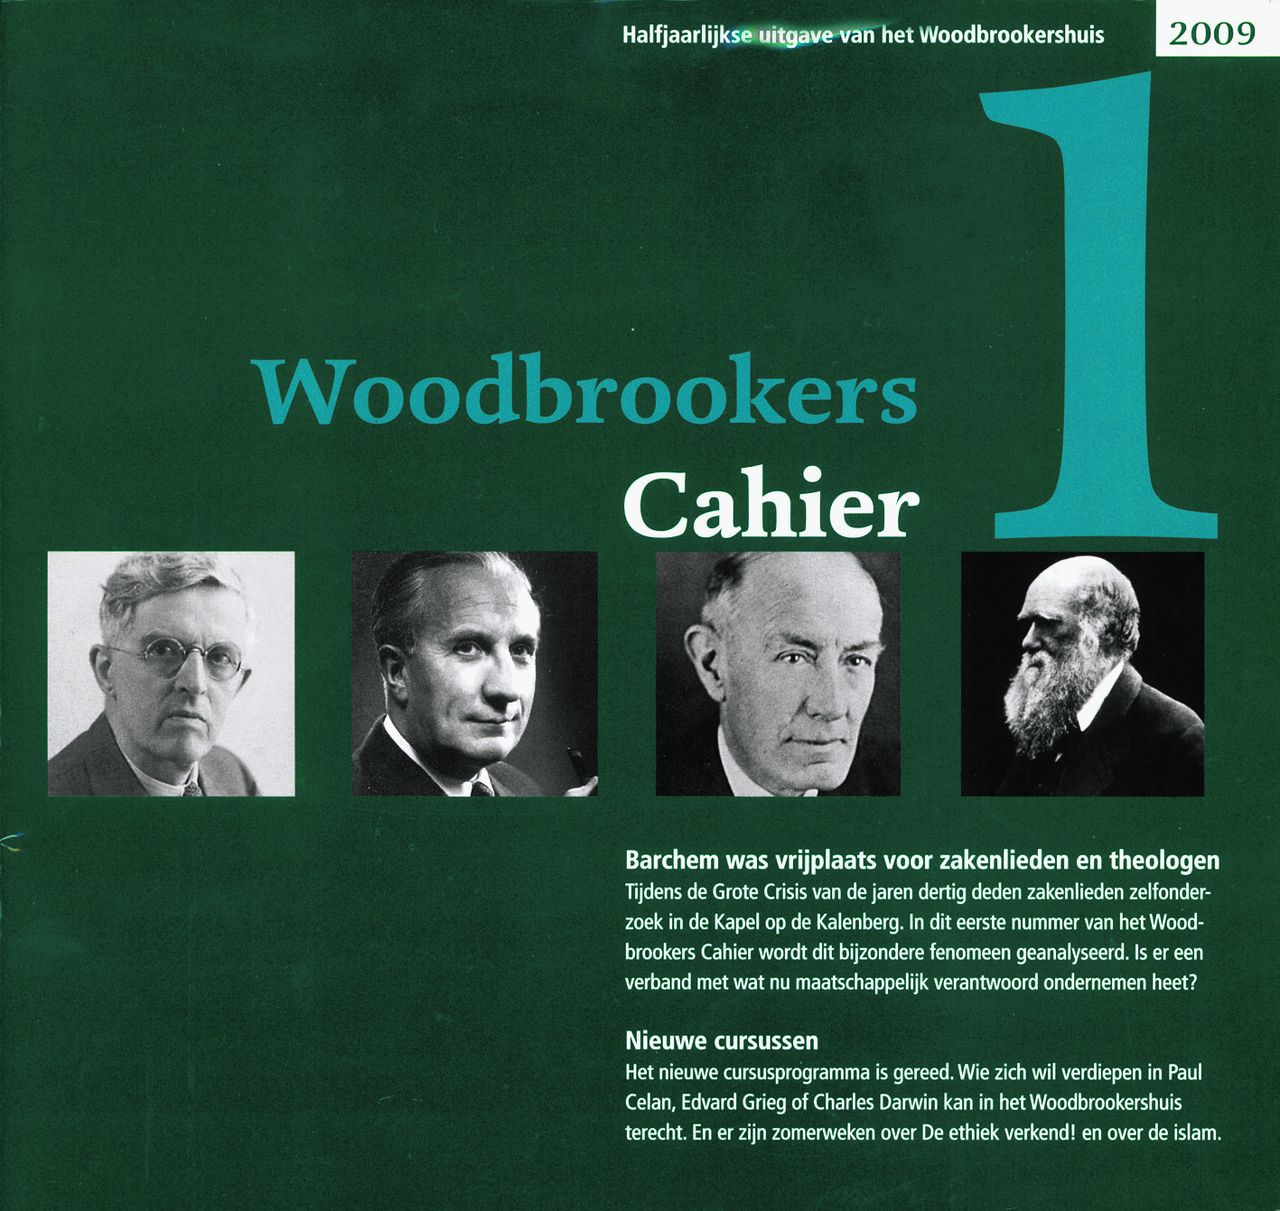 Woodbrookers Cahier nr. 1, uitgave van het Woodbrookershuis Auteur: Wouter Lookman 56 pag. 7,50 euro. Bestellen: inschrijvingen@woodbrookershuis.nl